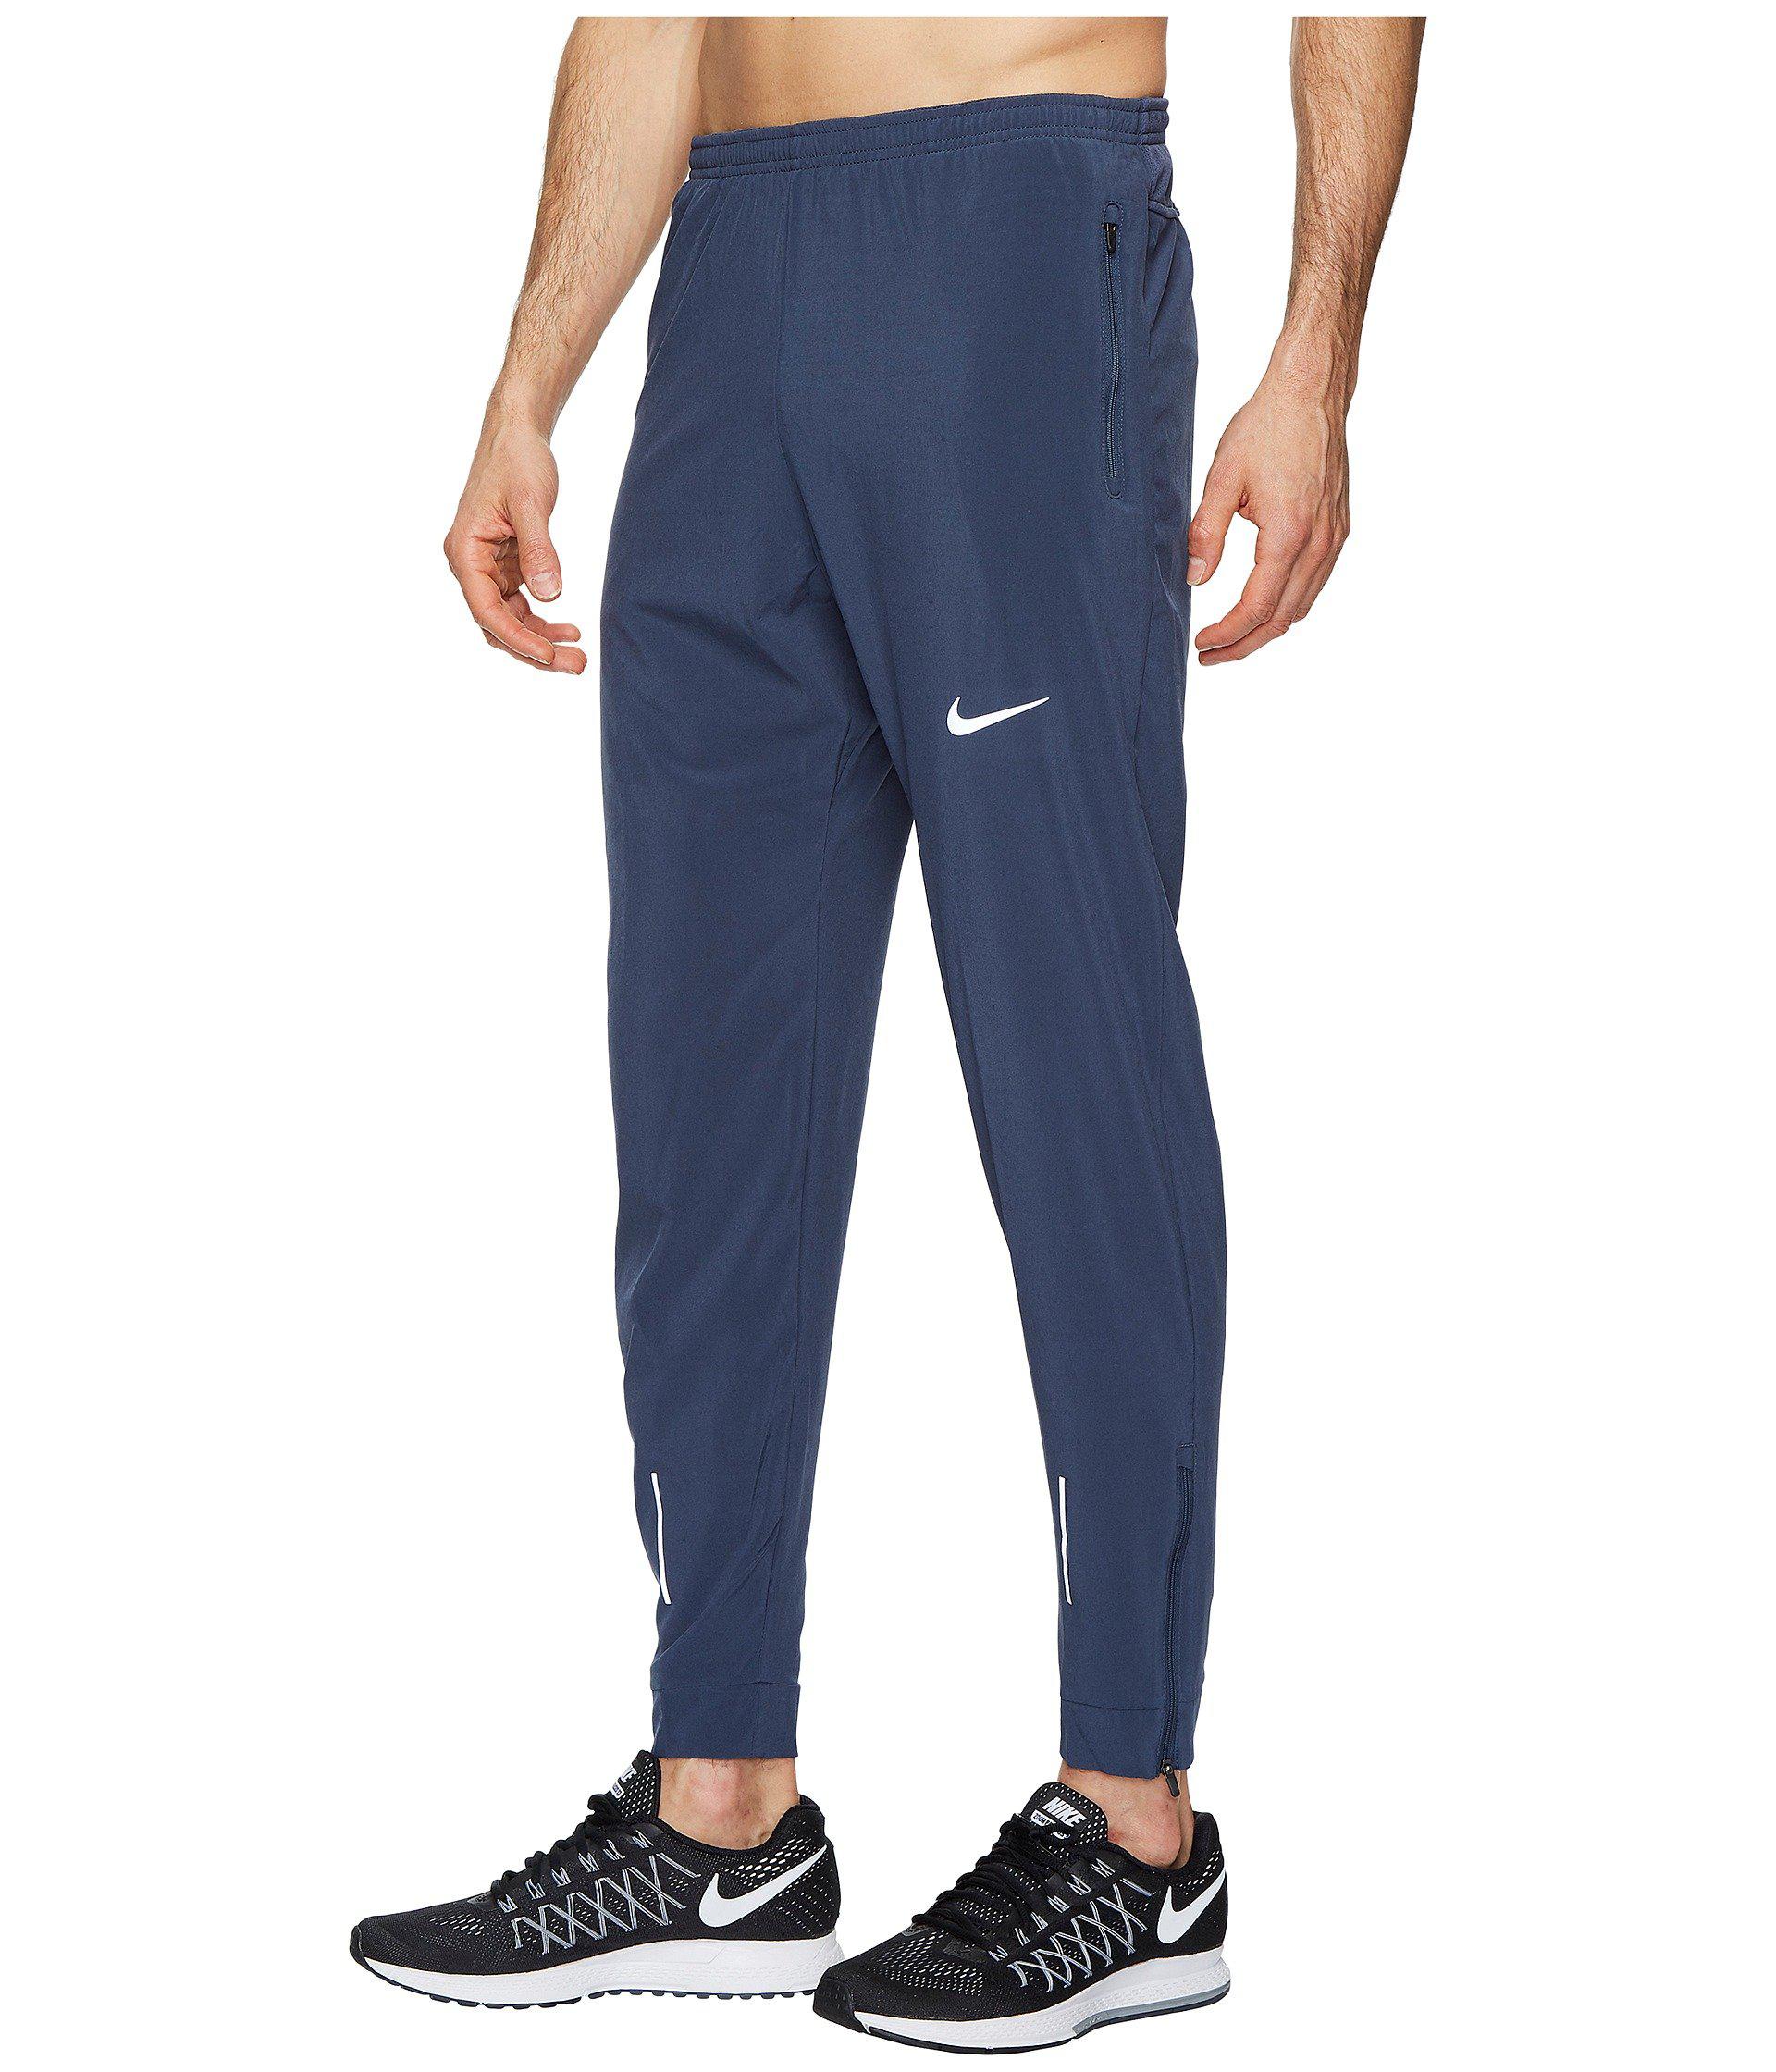 Nike Flex Essential Running Pant in Blue for Men - Lyst